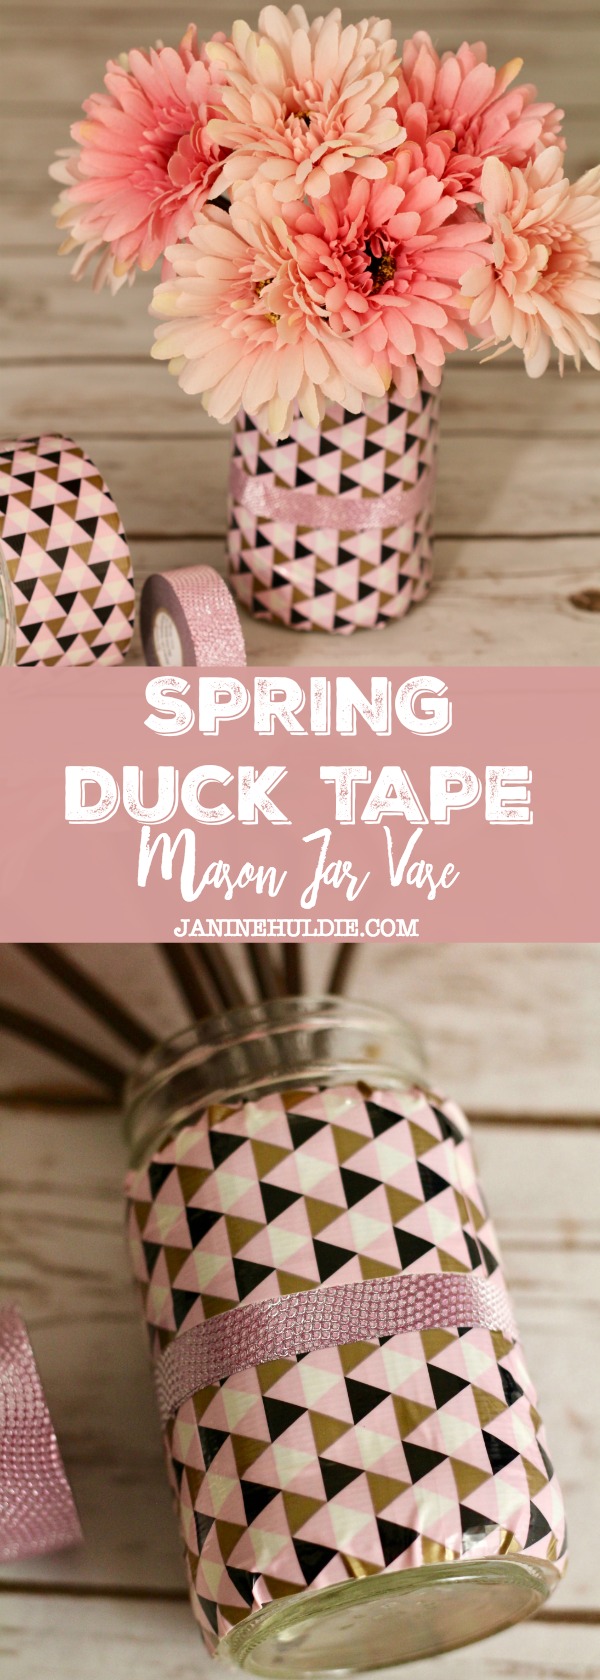 Duck Tape Spring Mason Jar Vase